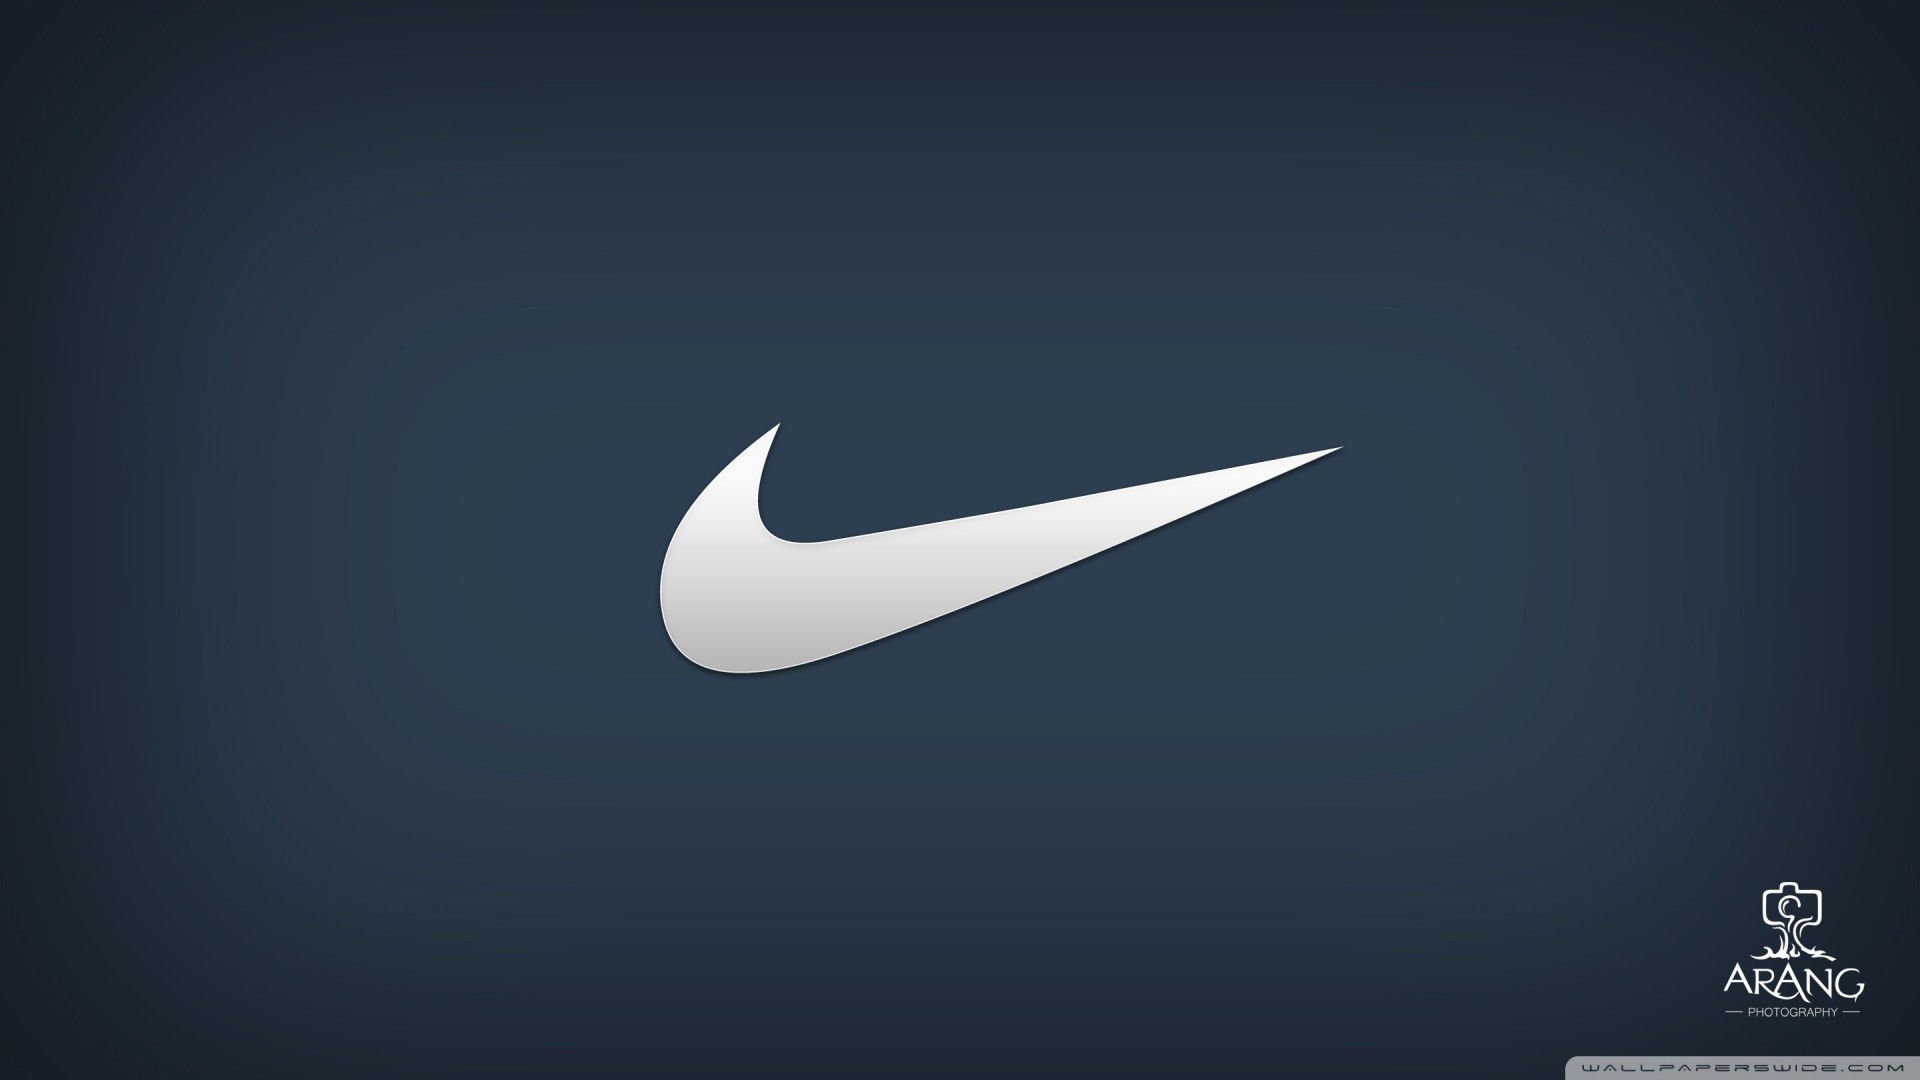 General 1920x1080 Nike logo simple background brand blue background